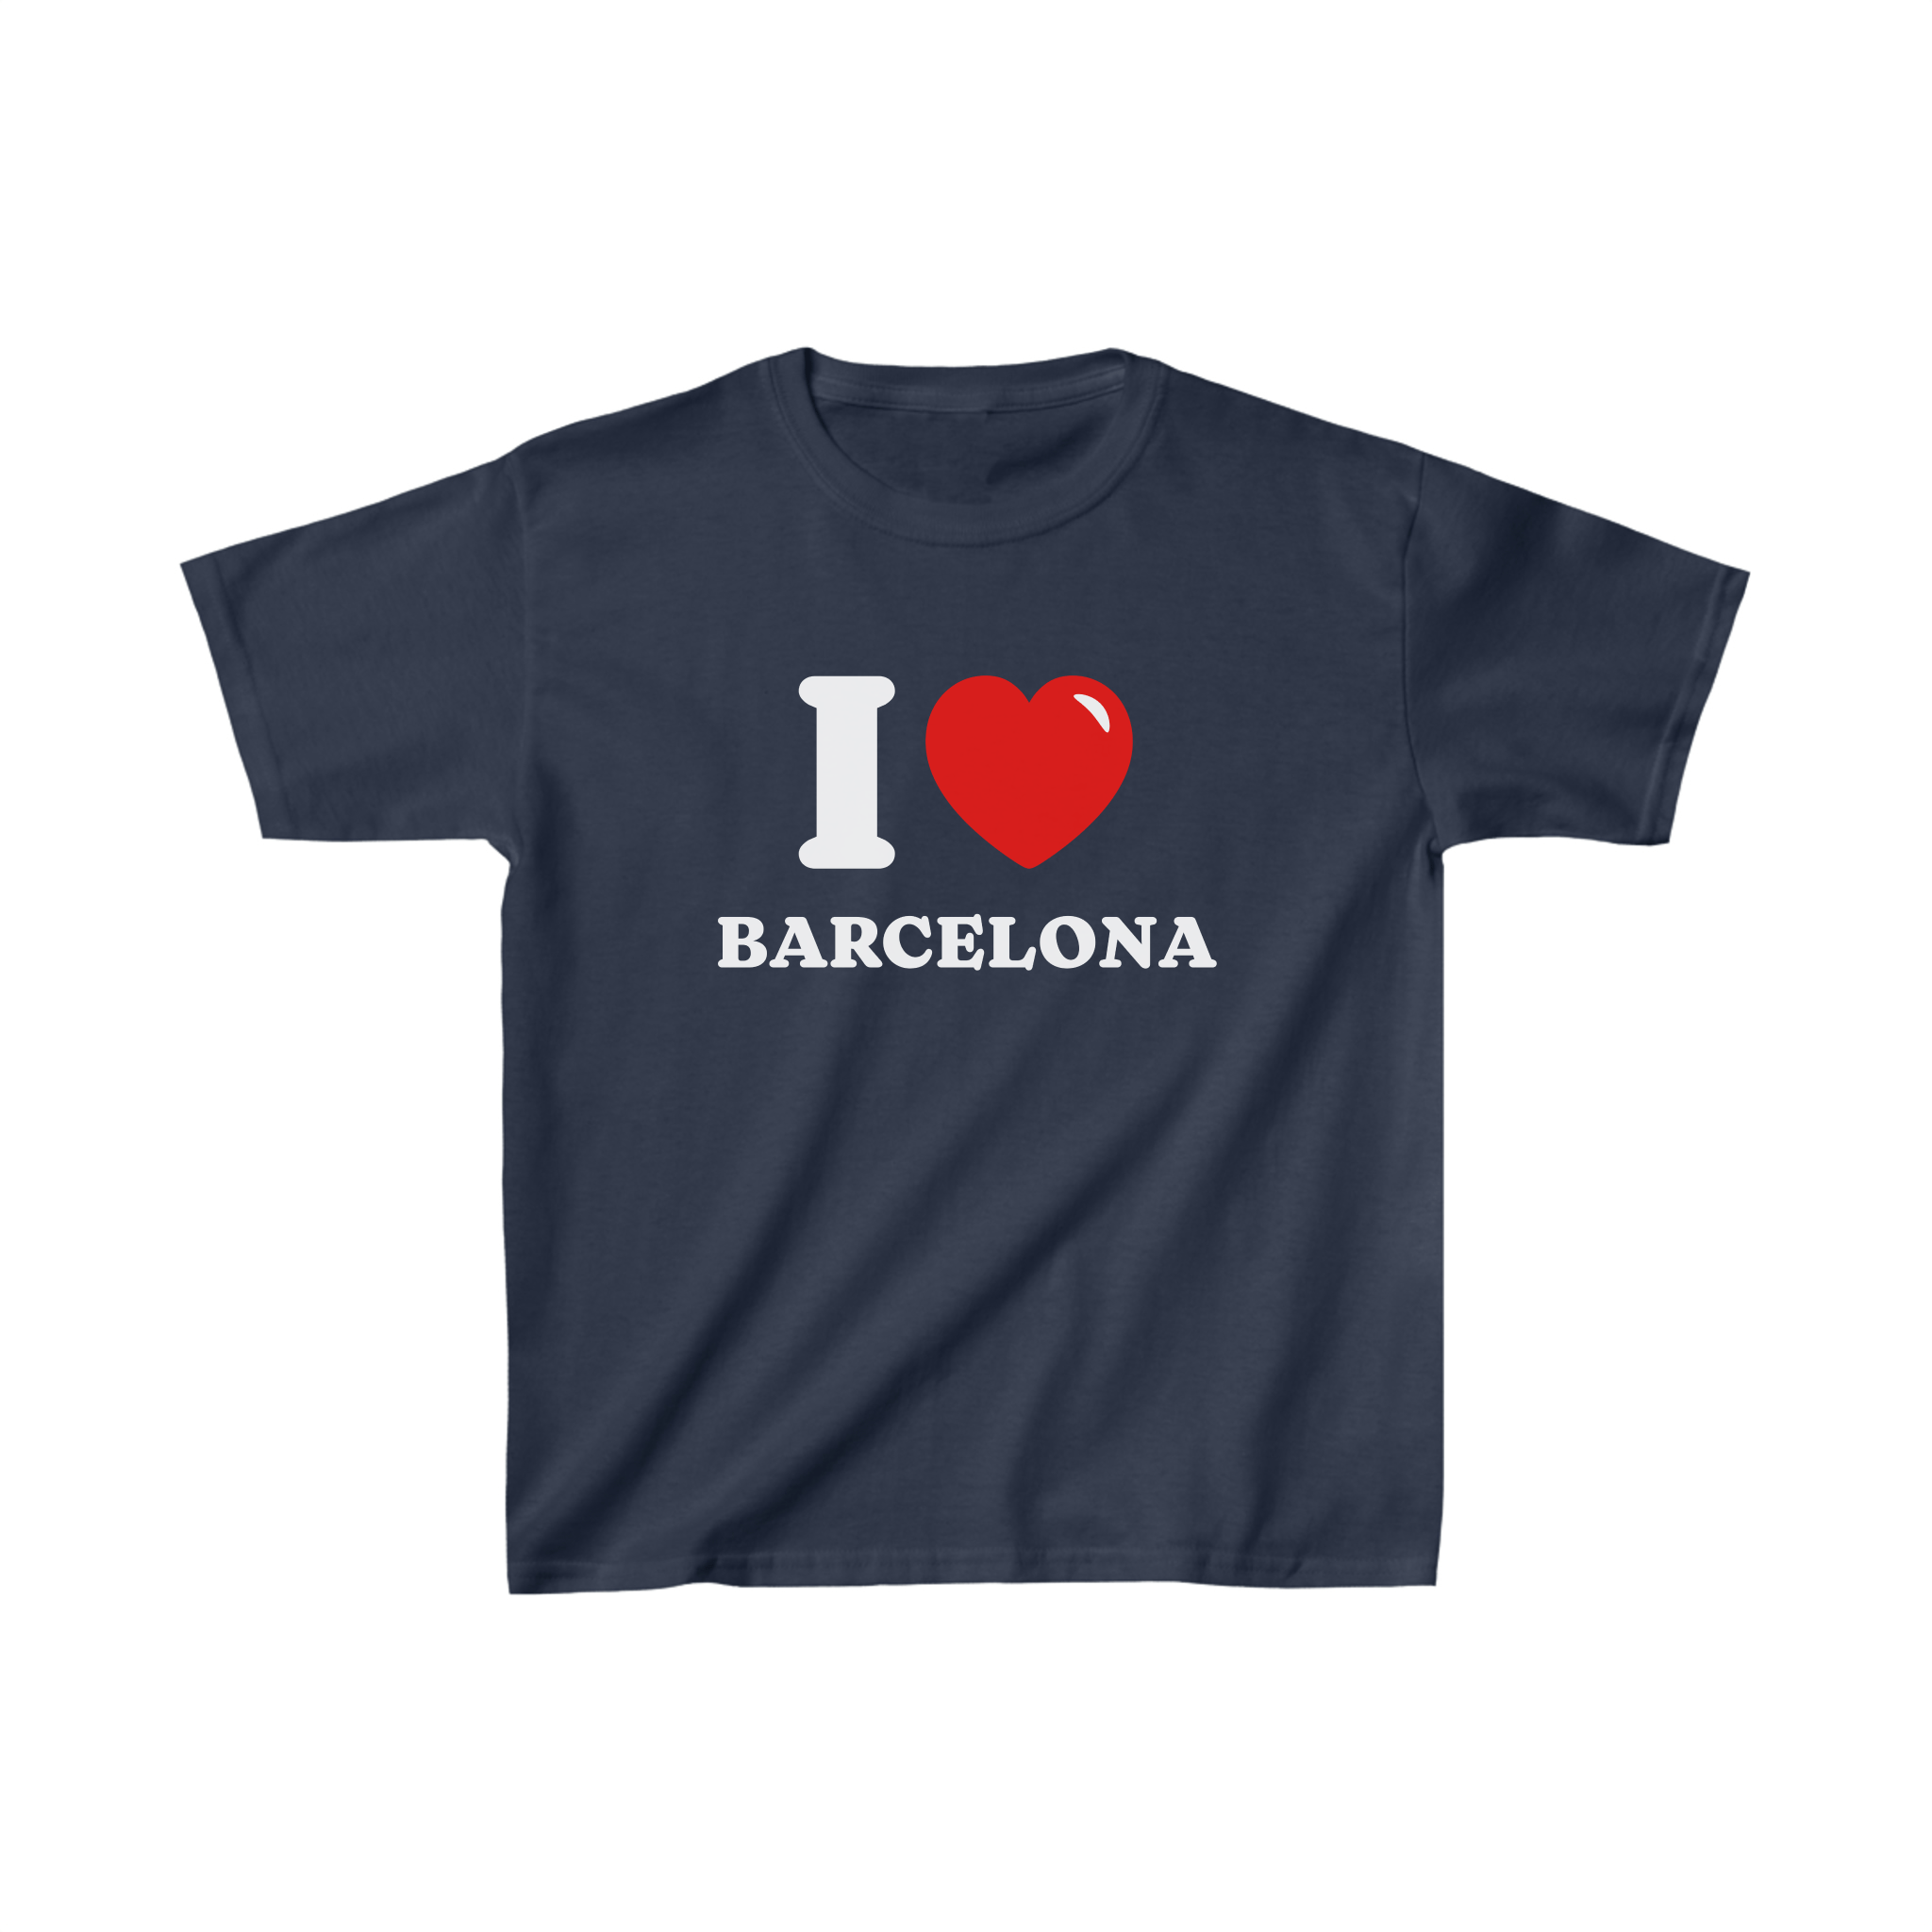 'I love Barcelona' baby tee - In Print We Trust